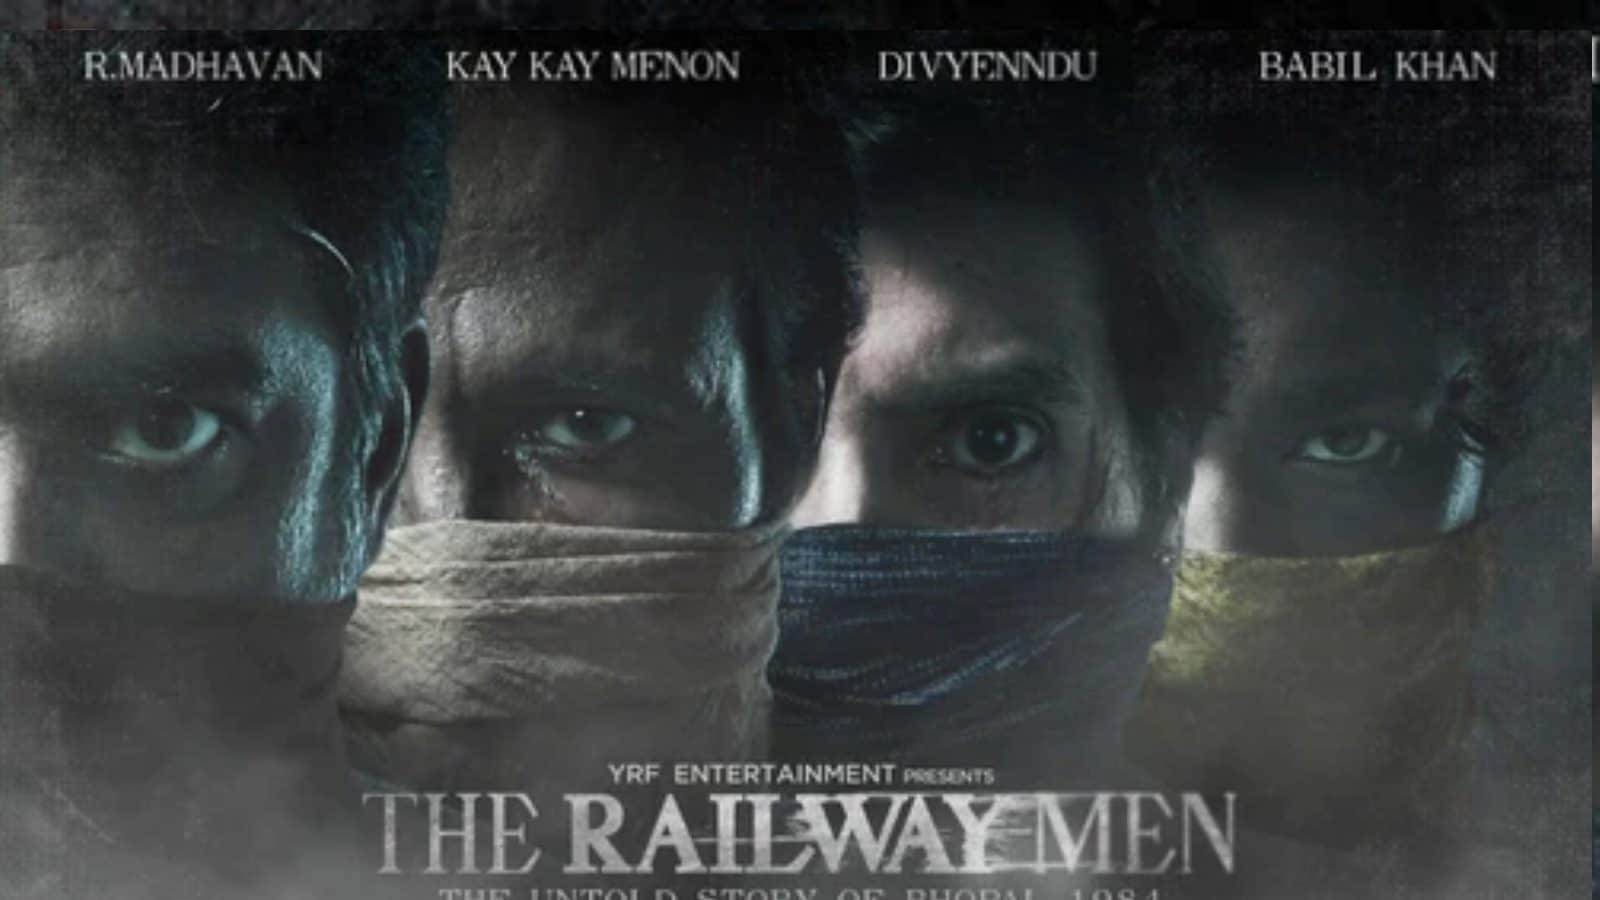 The Railway Men: YRF's First OTT Series, Starring R Madhavan, Is Based on Bhopal Gas Tragedy